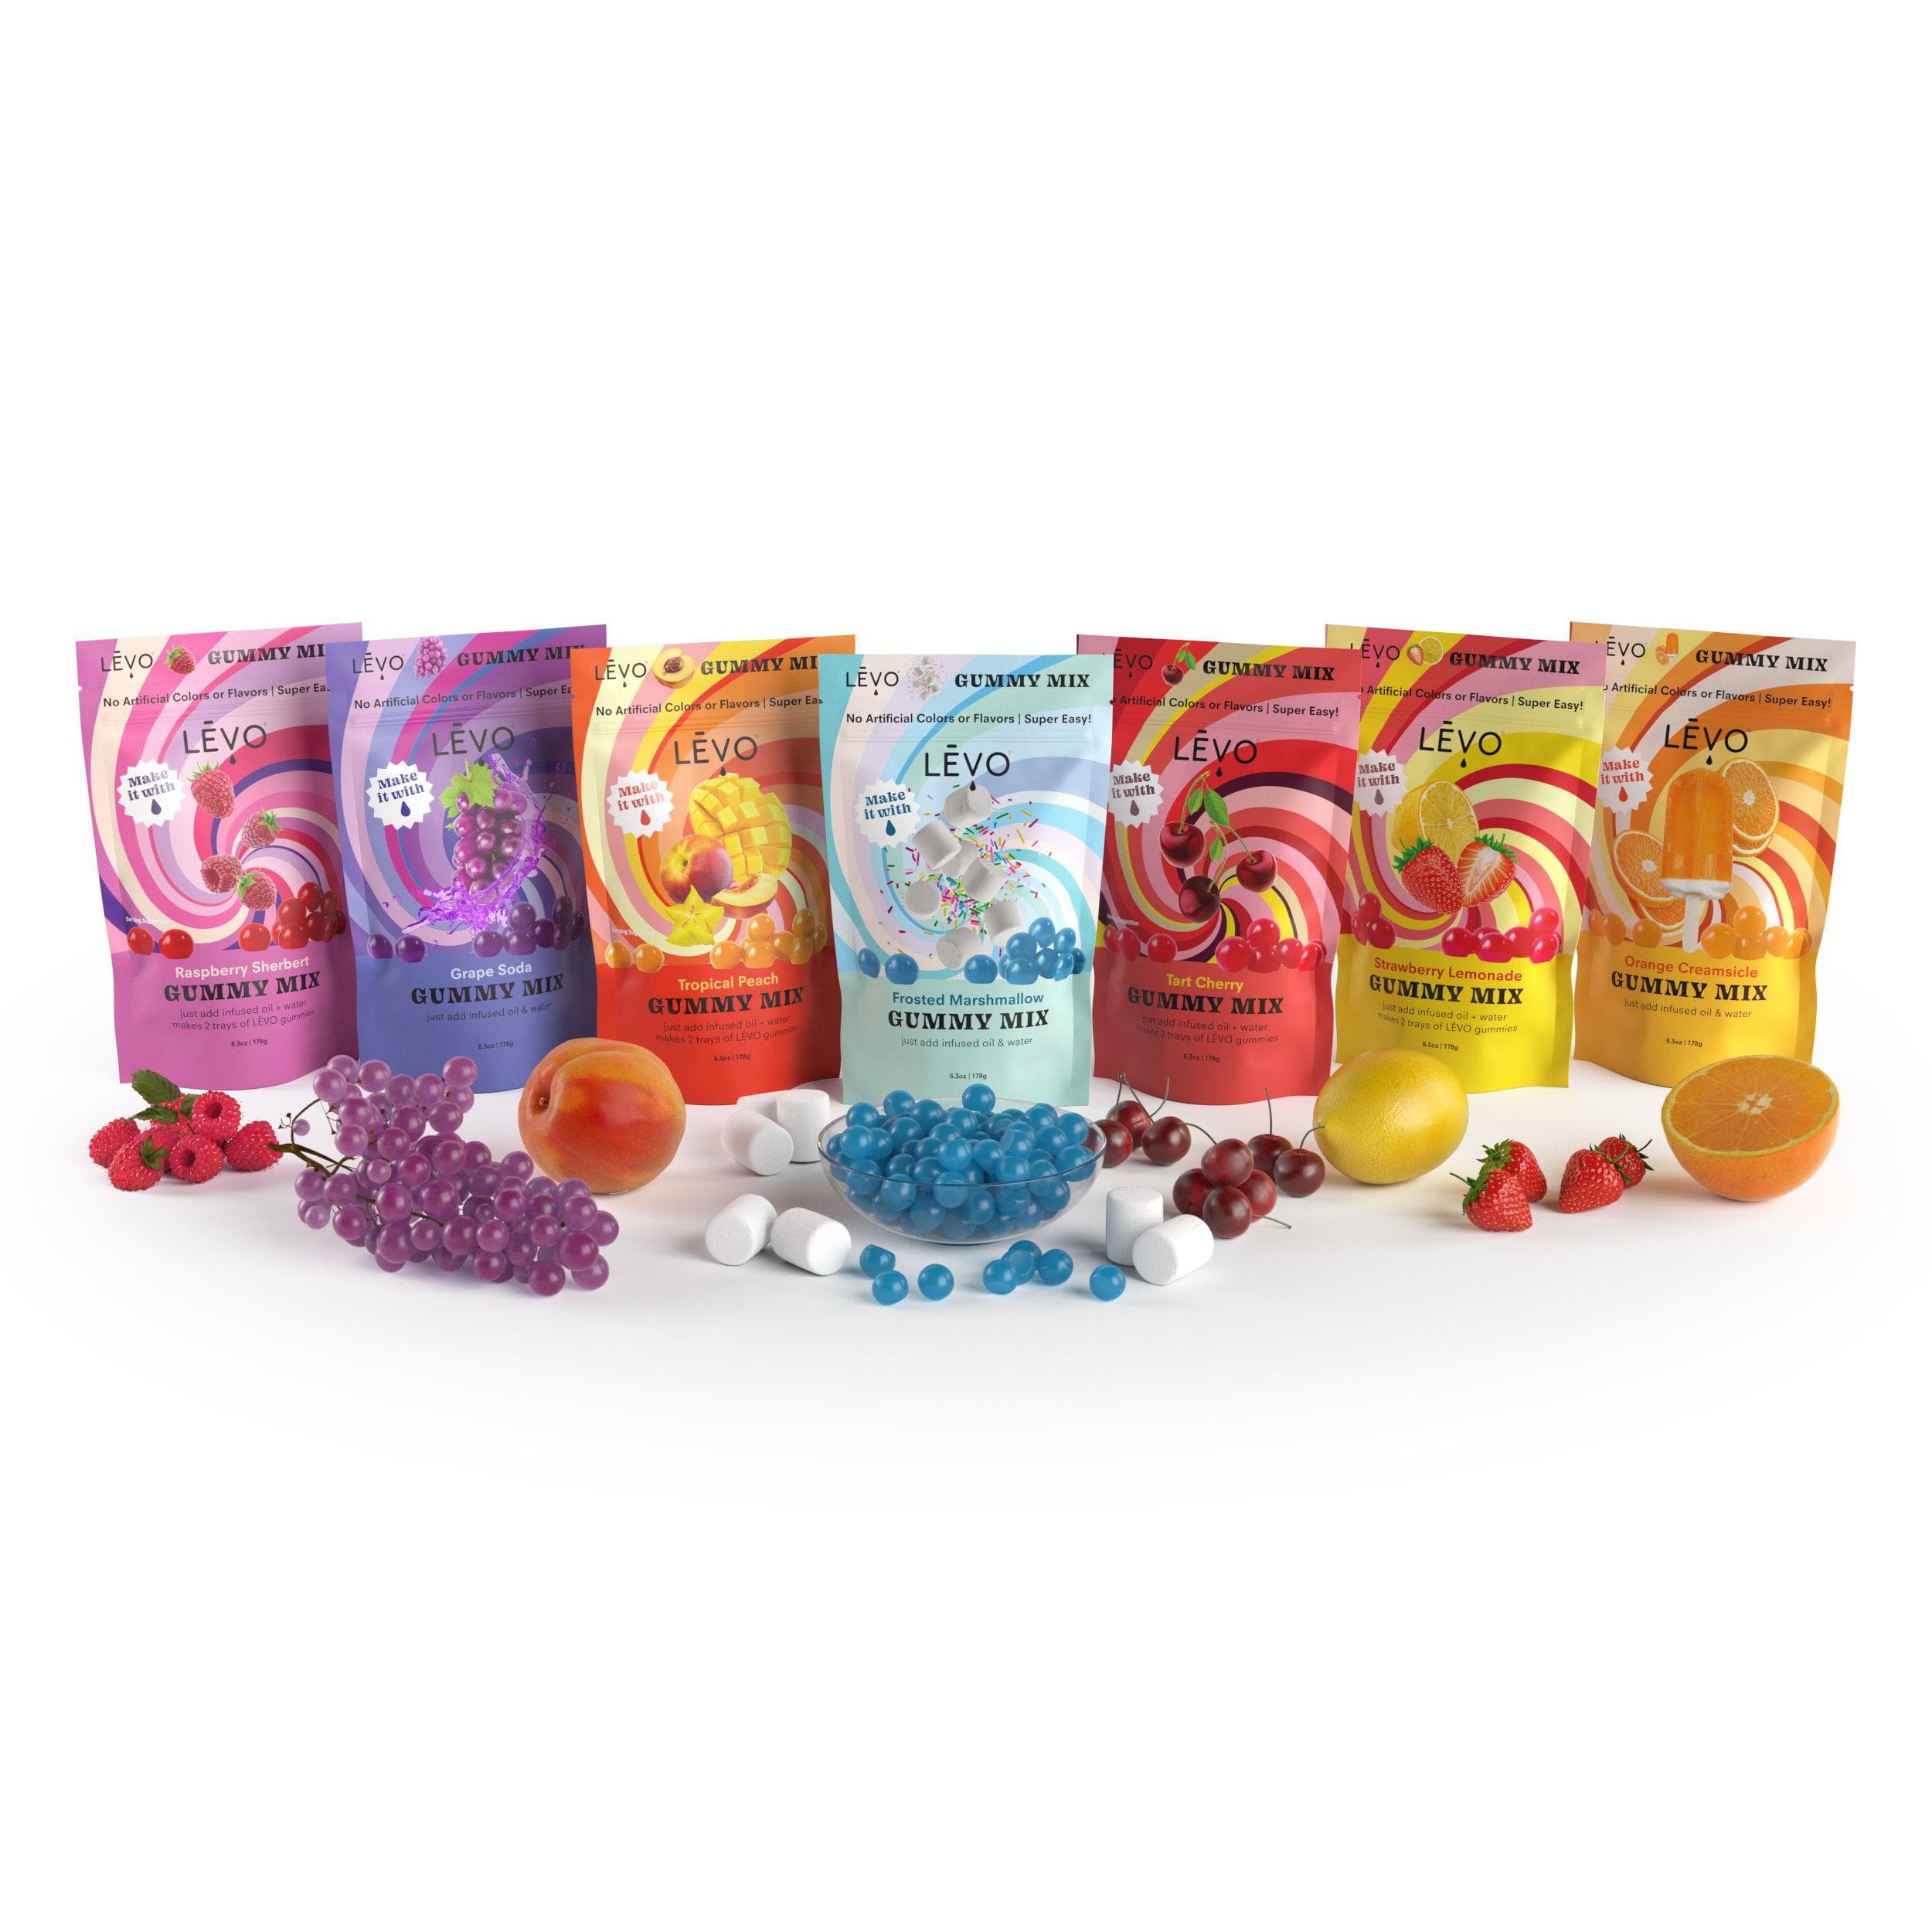 Lot of 2 - LEVO Gummy Package Mixes Flavor Raspberry Sherbert 6.3